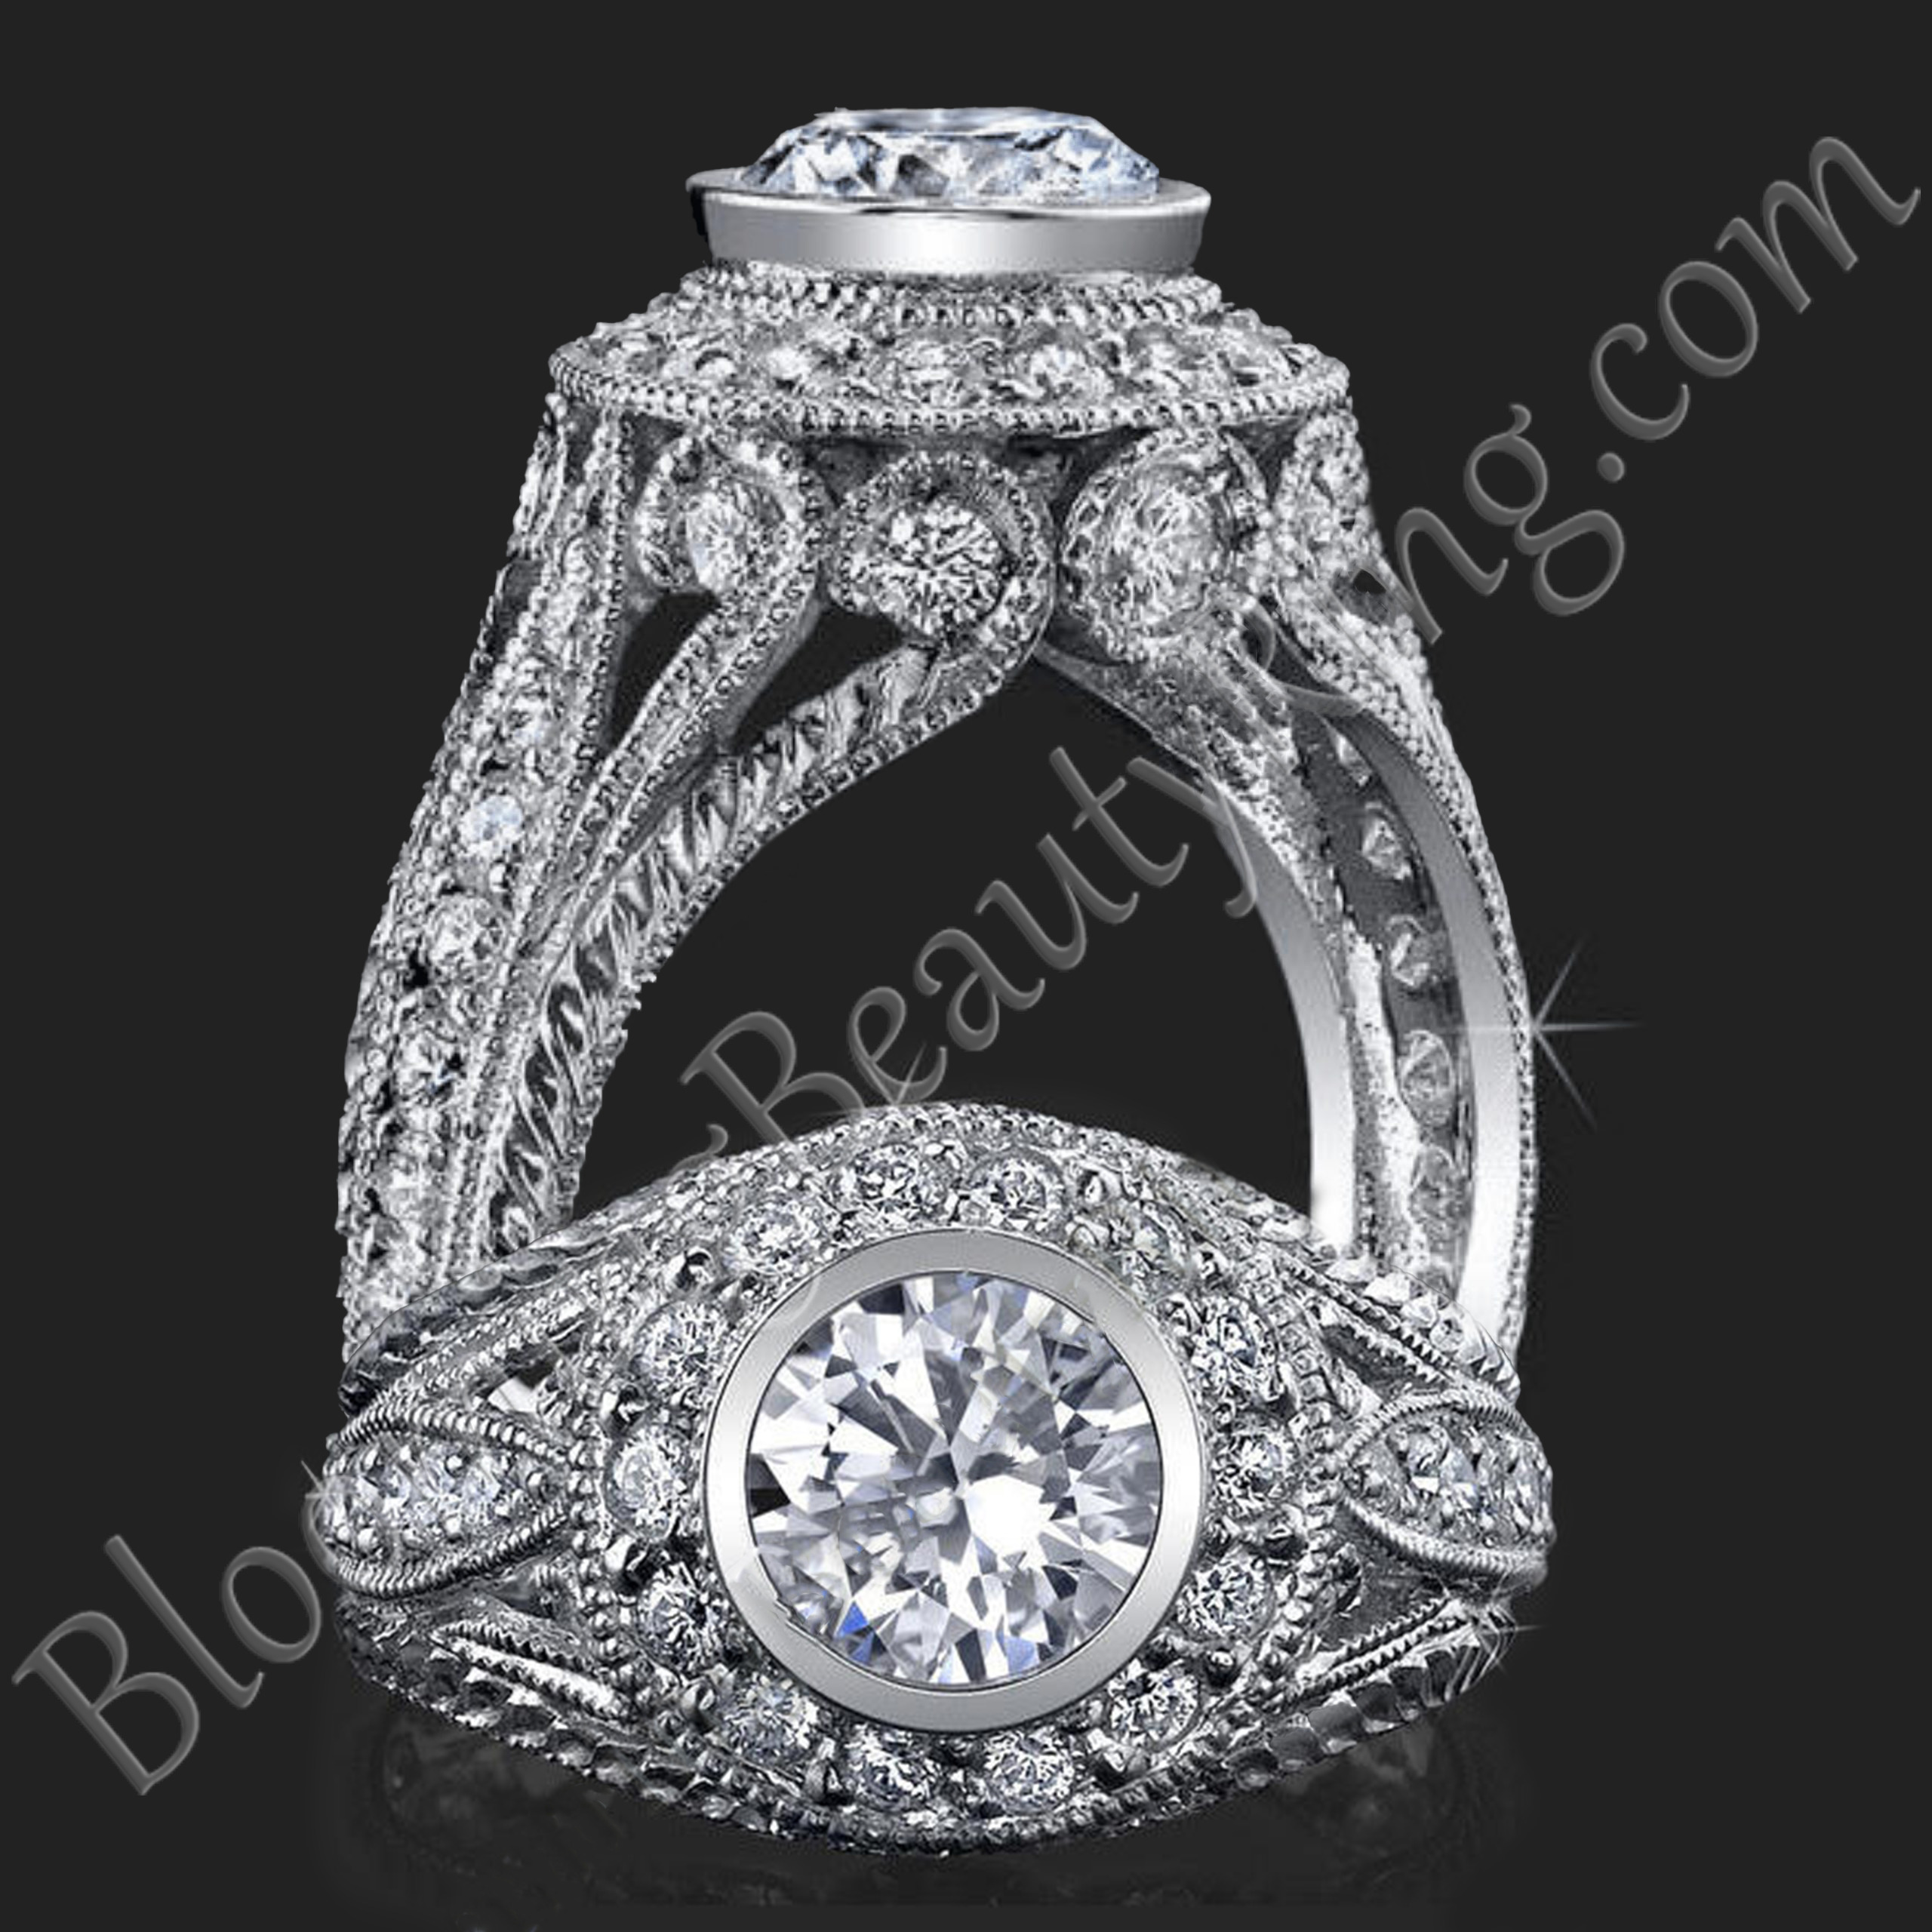 Bezel Set Vintage Style / Antique Detailing / Engagement Ring